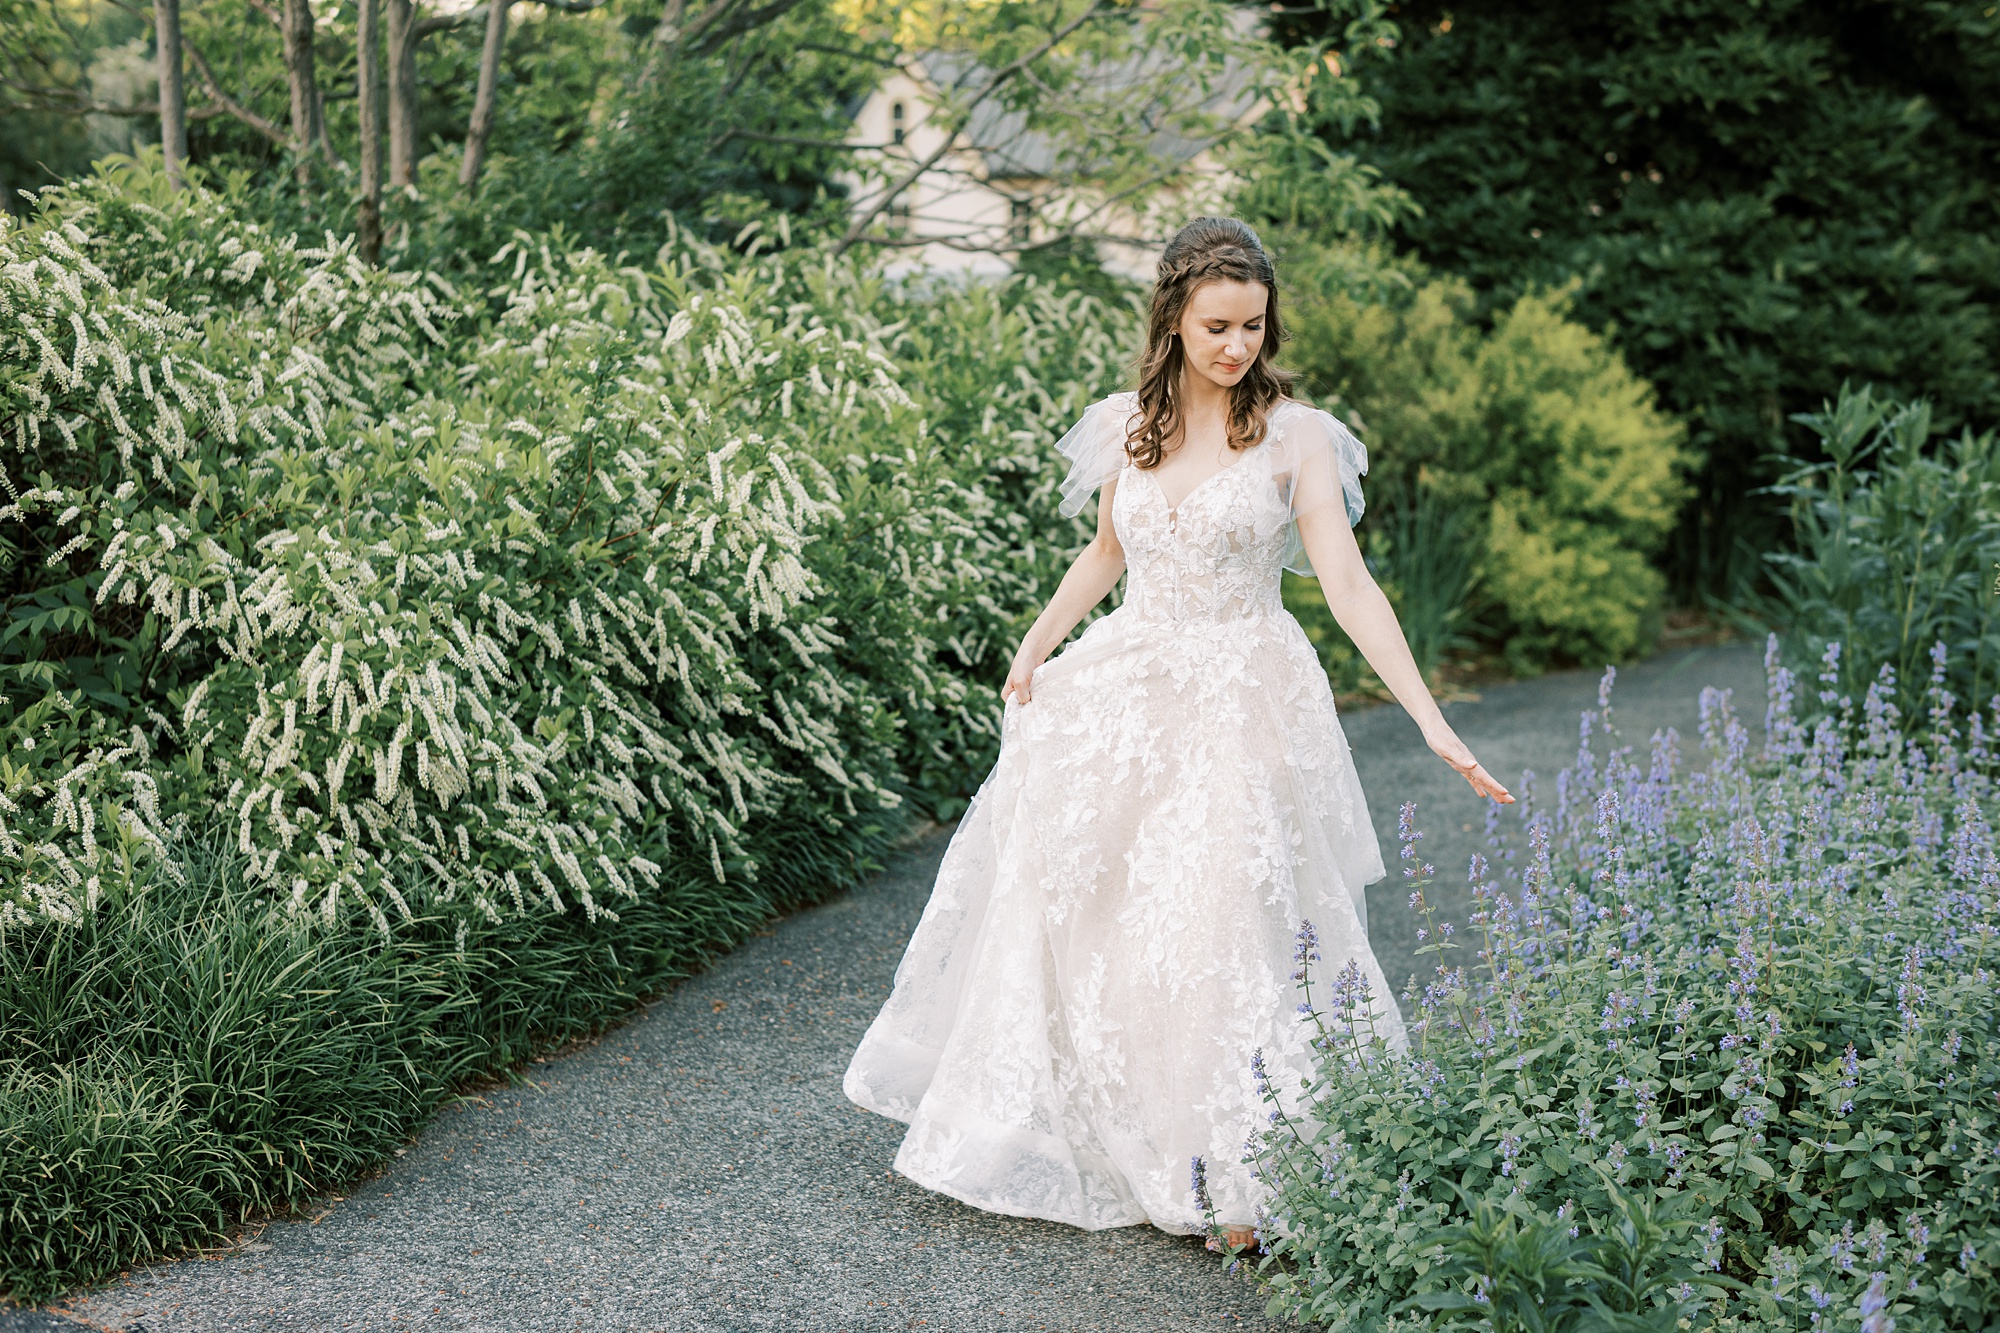 bride walks through garden touching plants with her hands 